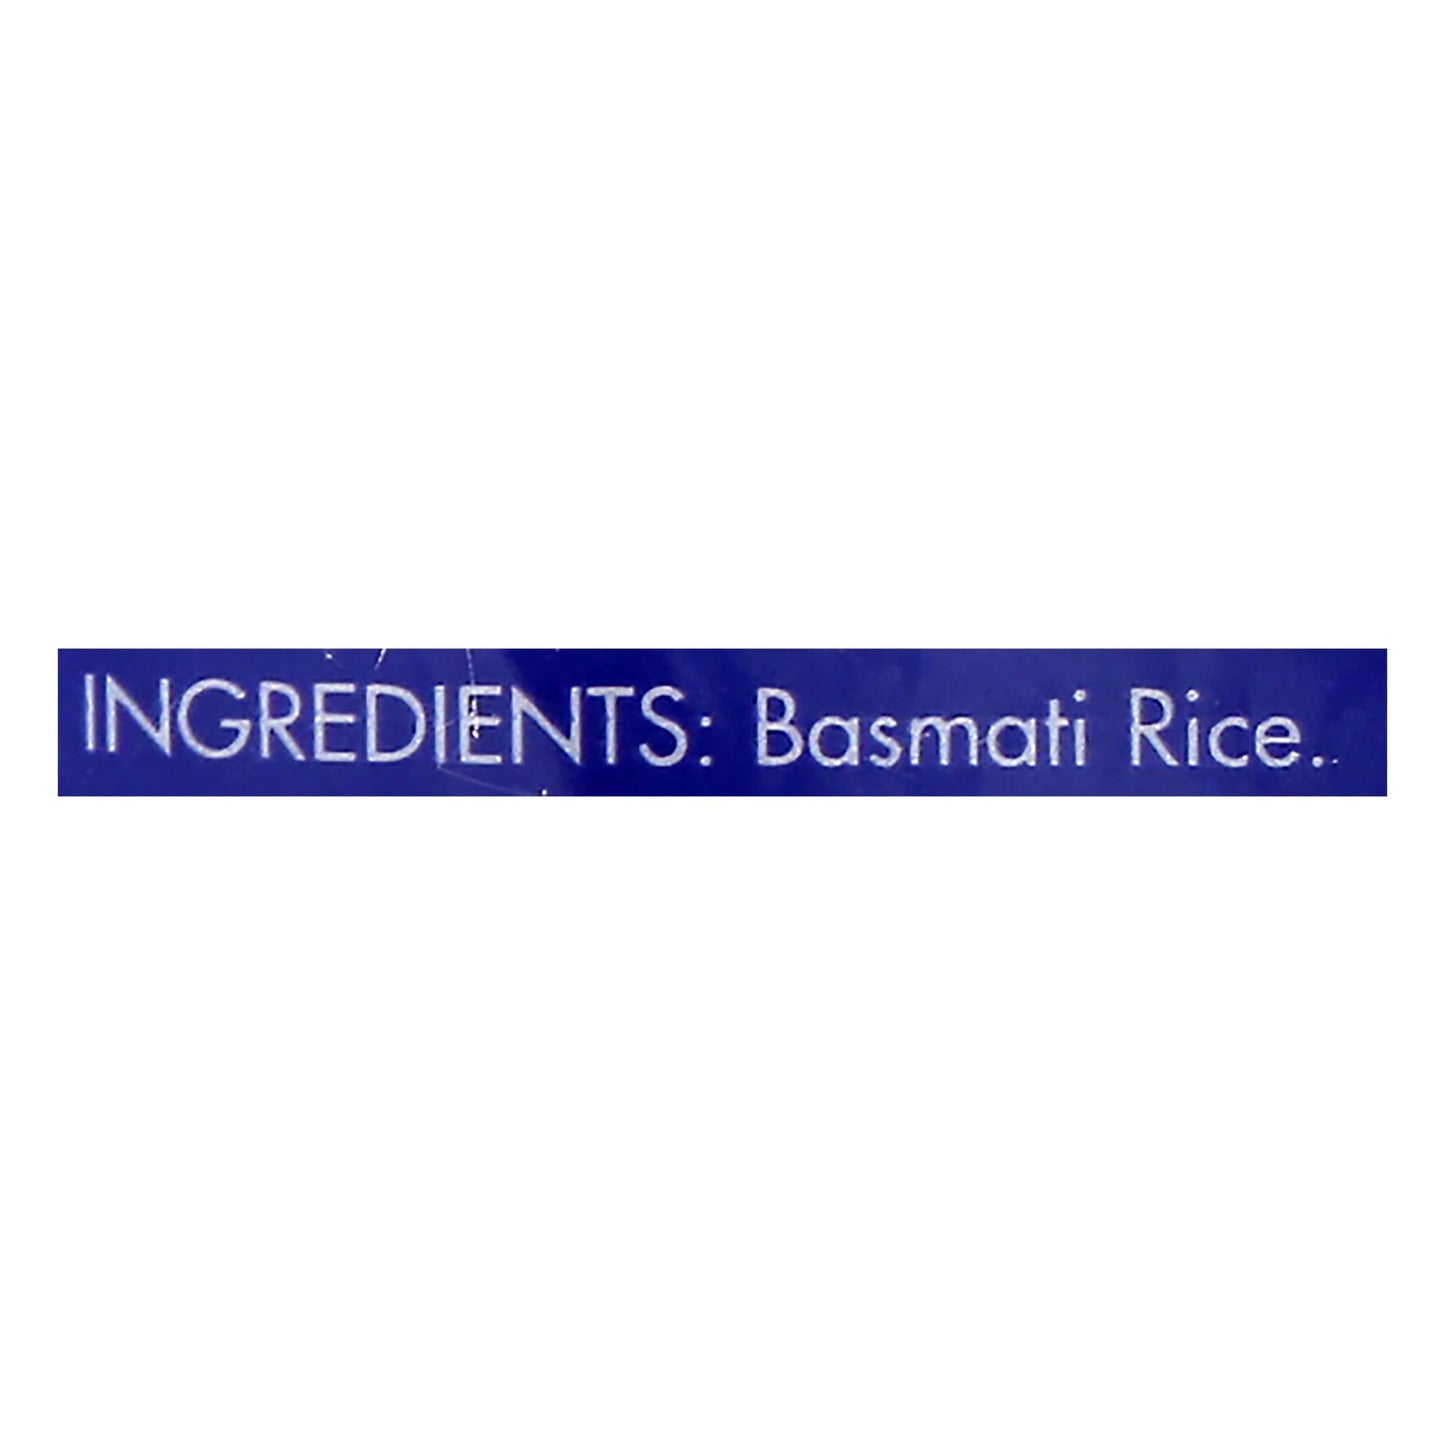 Mahatma Basmati White Rice, Fragrant Extra Long Grain Rice, 5 lb Bag